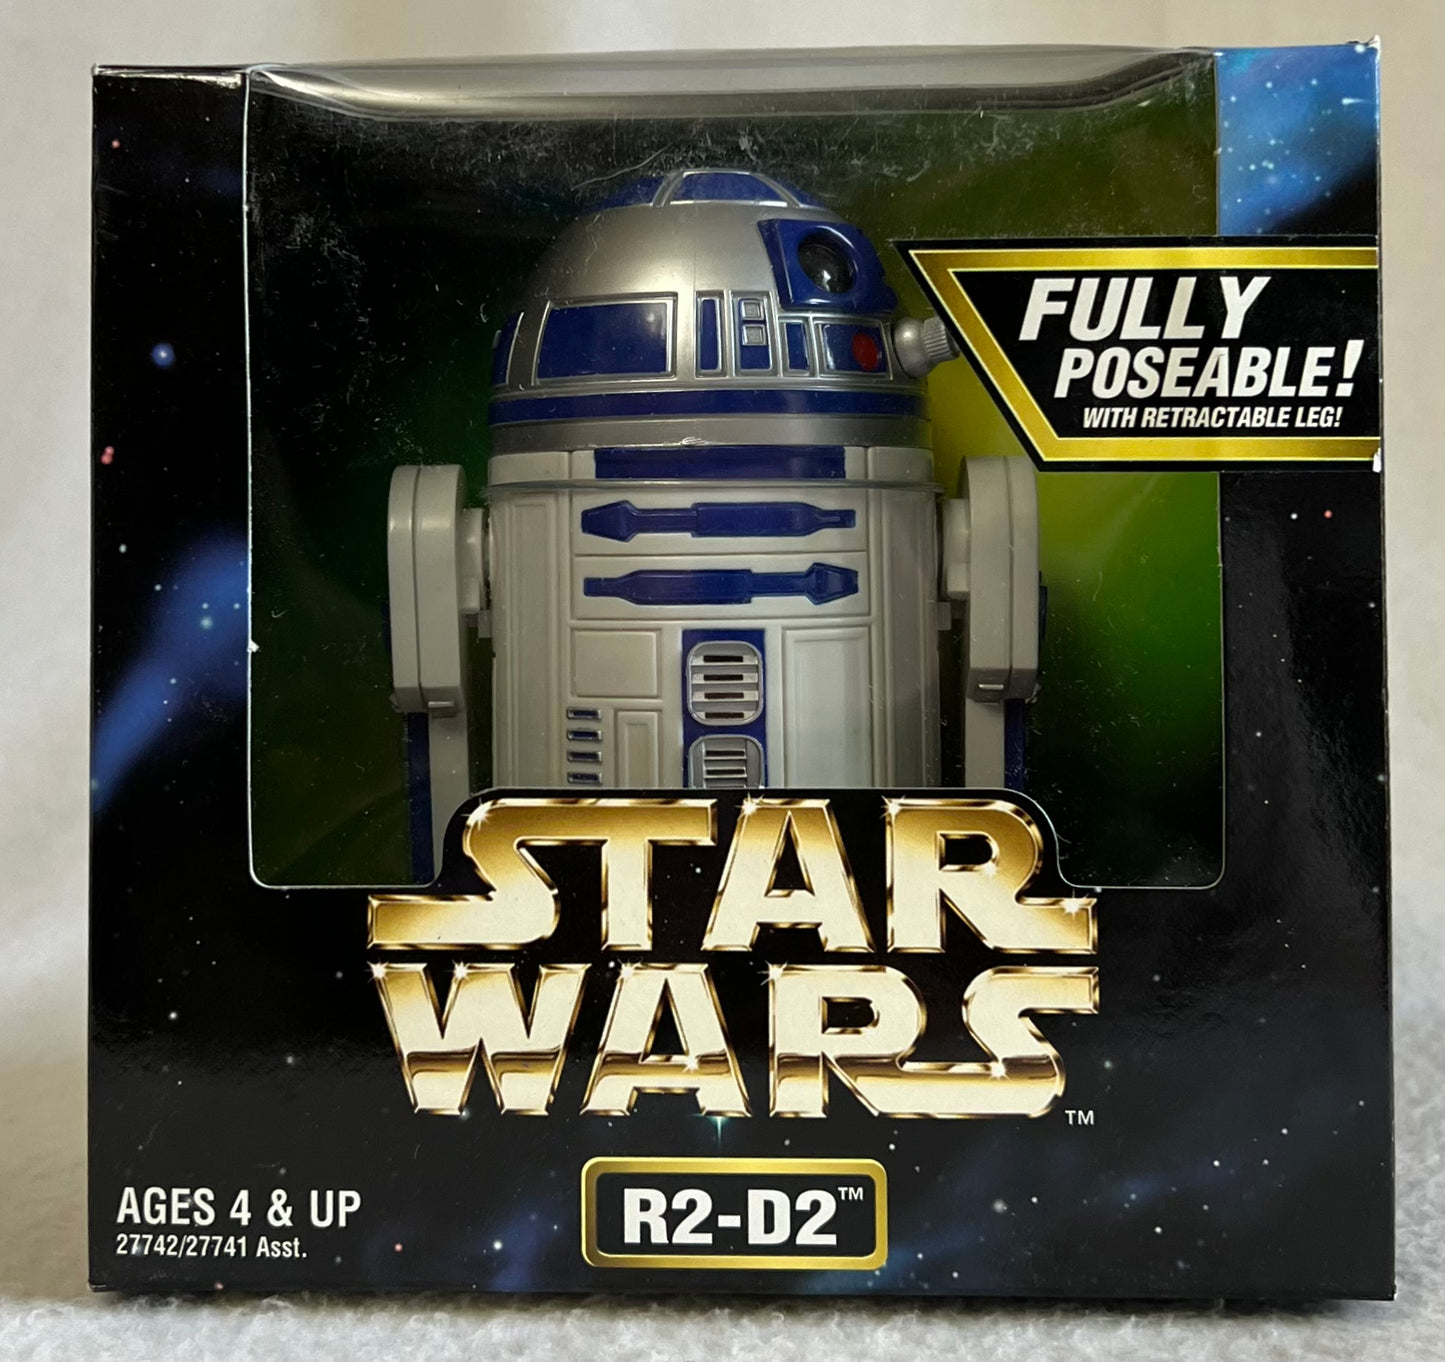 NIB *Star Wars 6" Action Collection "R2-D2" Vintage 1997 Figurine